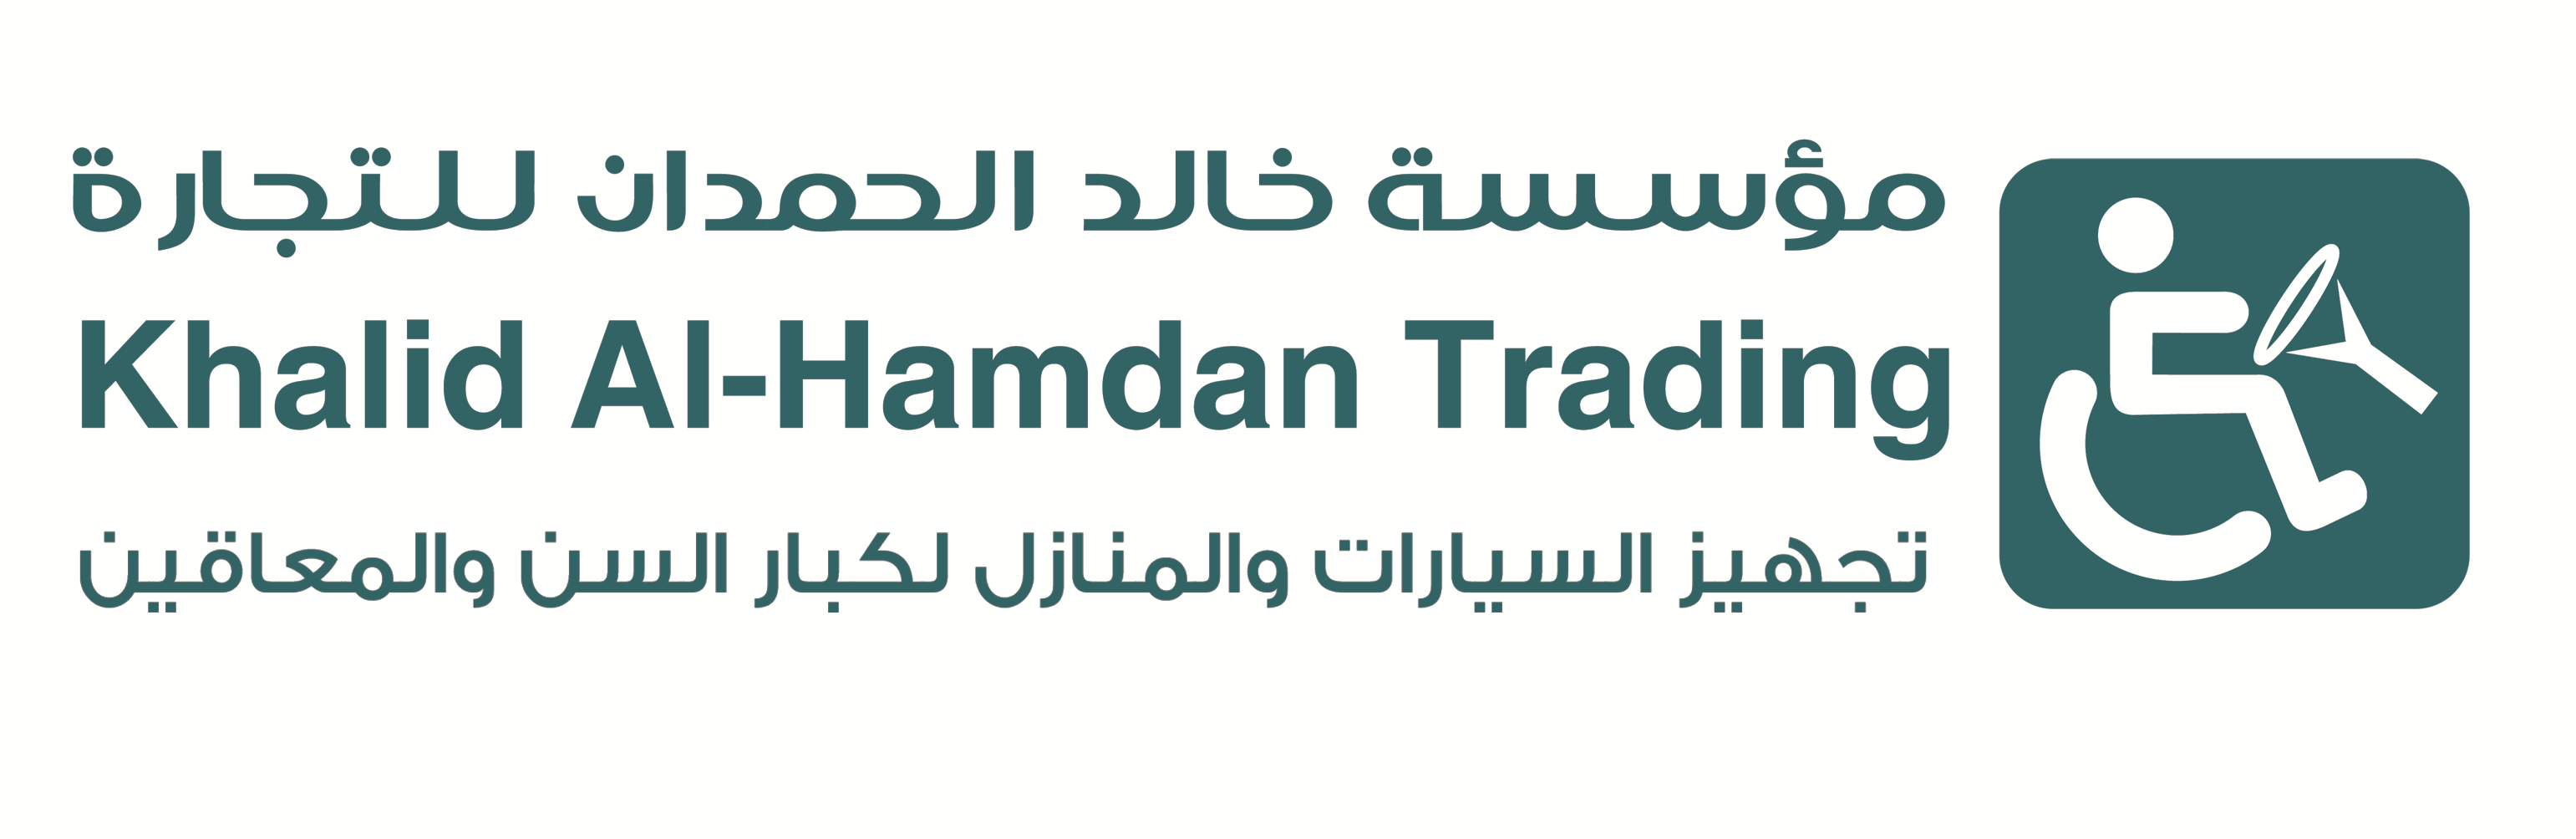 Al Hamdan company logo - person in a wheelchair driving